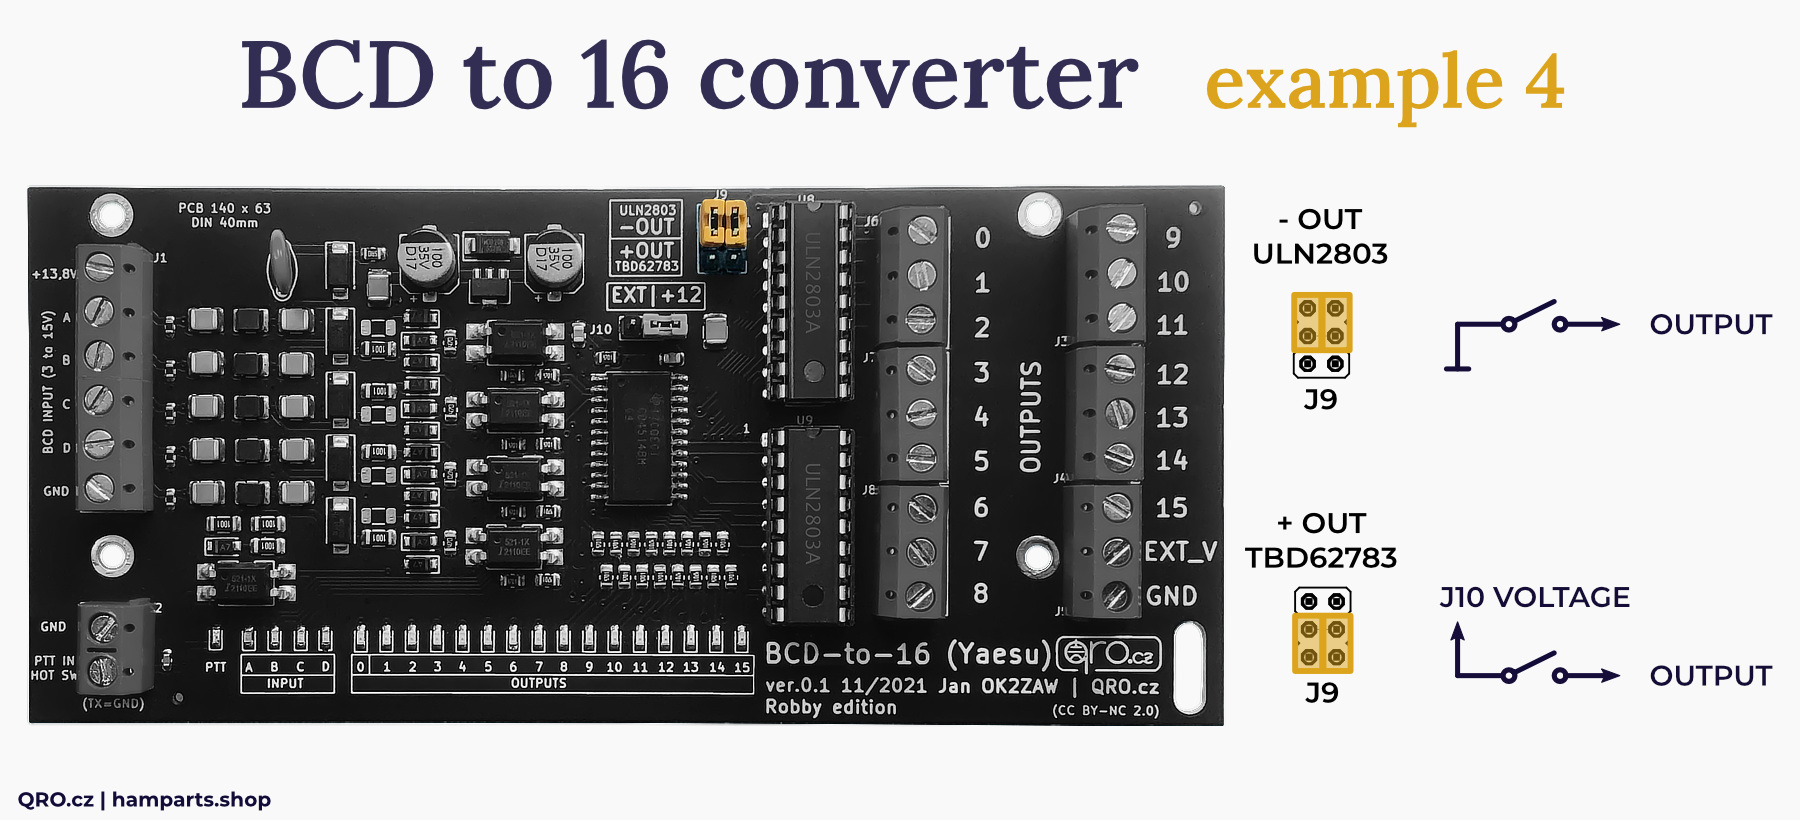 BCD to DEC 16 version converter by qro.cz hamparts.shop